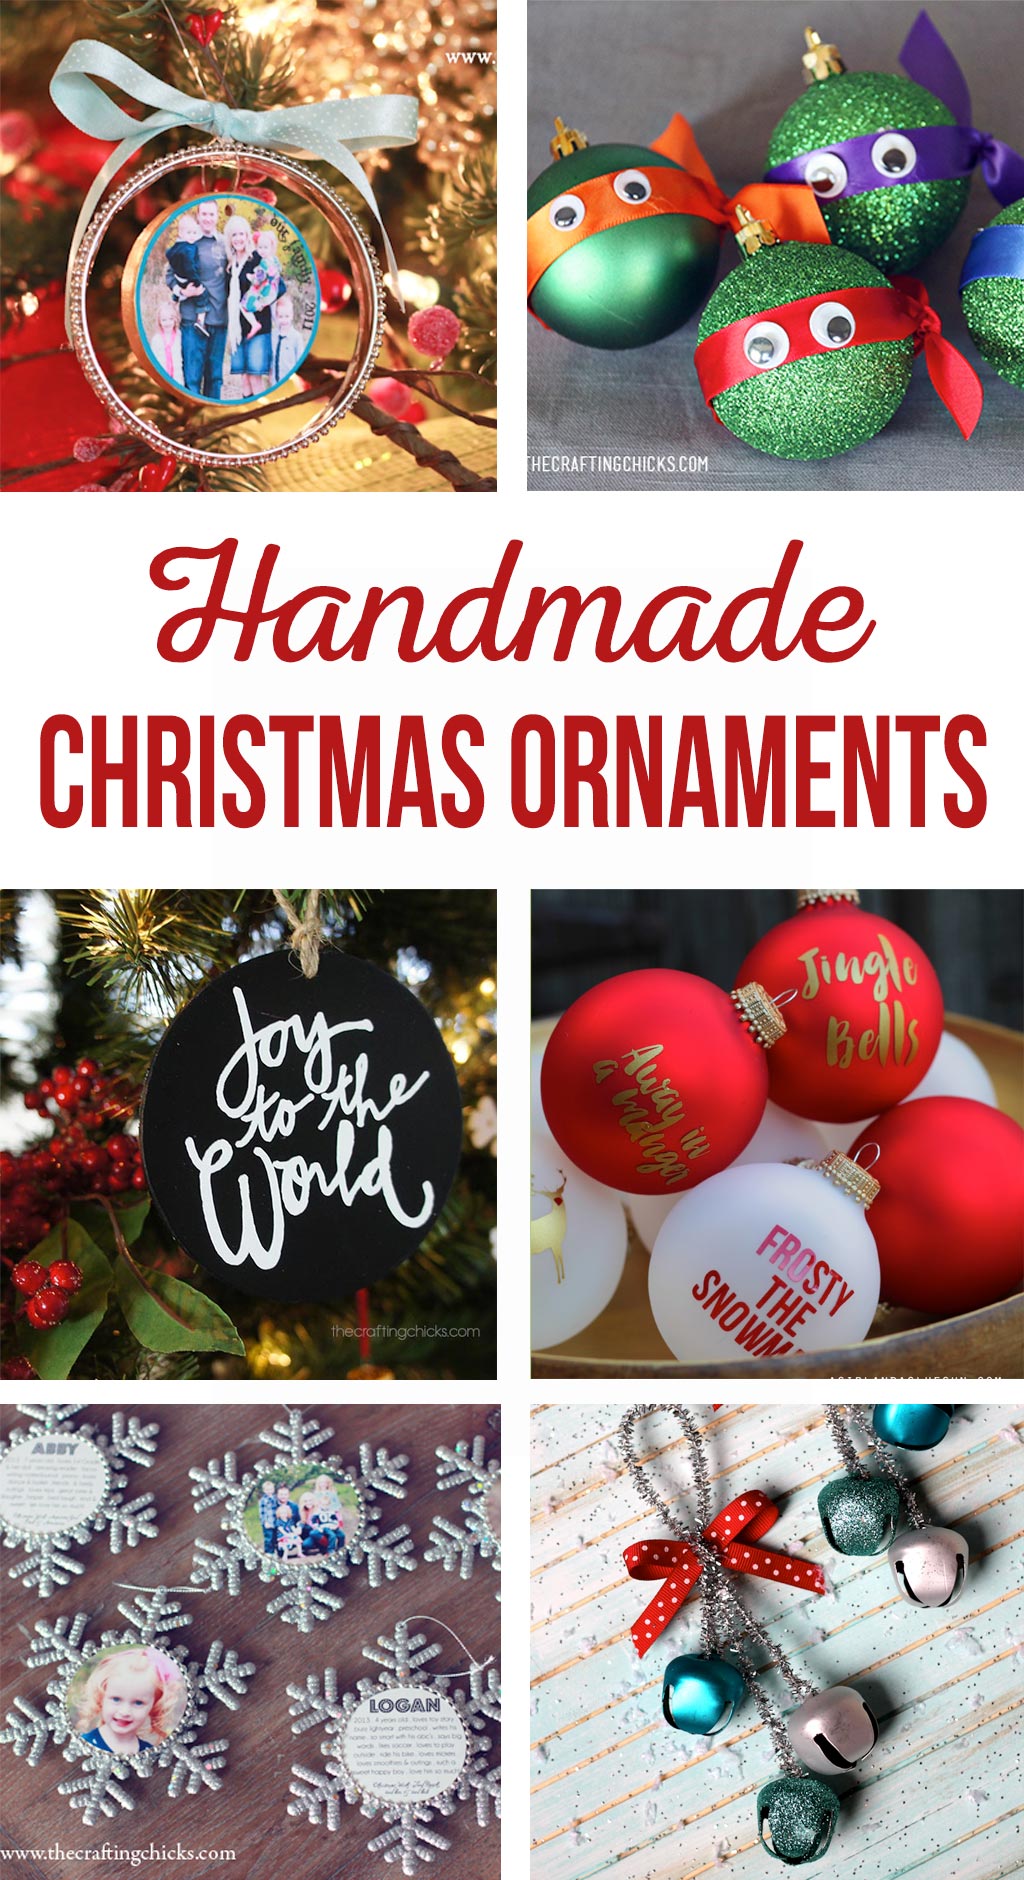 DIY Christmas Ornaments | 21 Favorite Handmade Christmas Ornaments | Photo ornaments, kids ornaments, Ninja Turtle Ornaments and more! #handmadechristmas #diyornaments